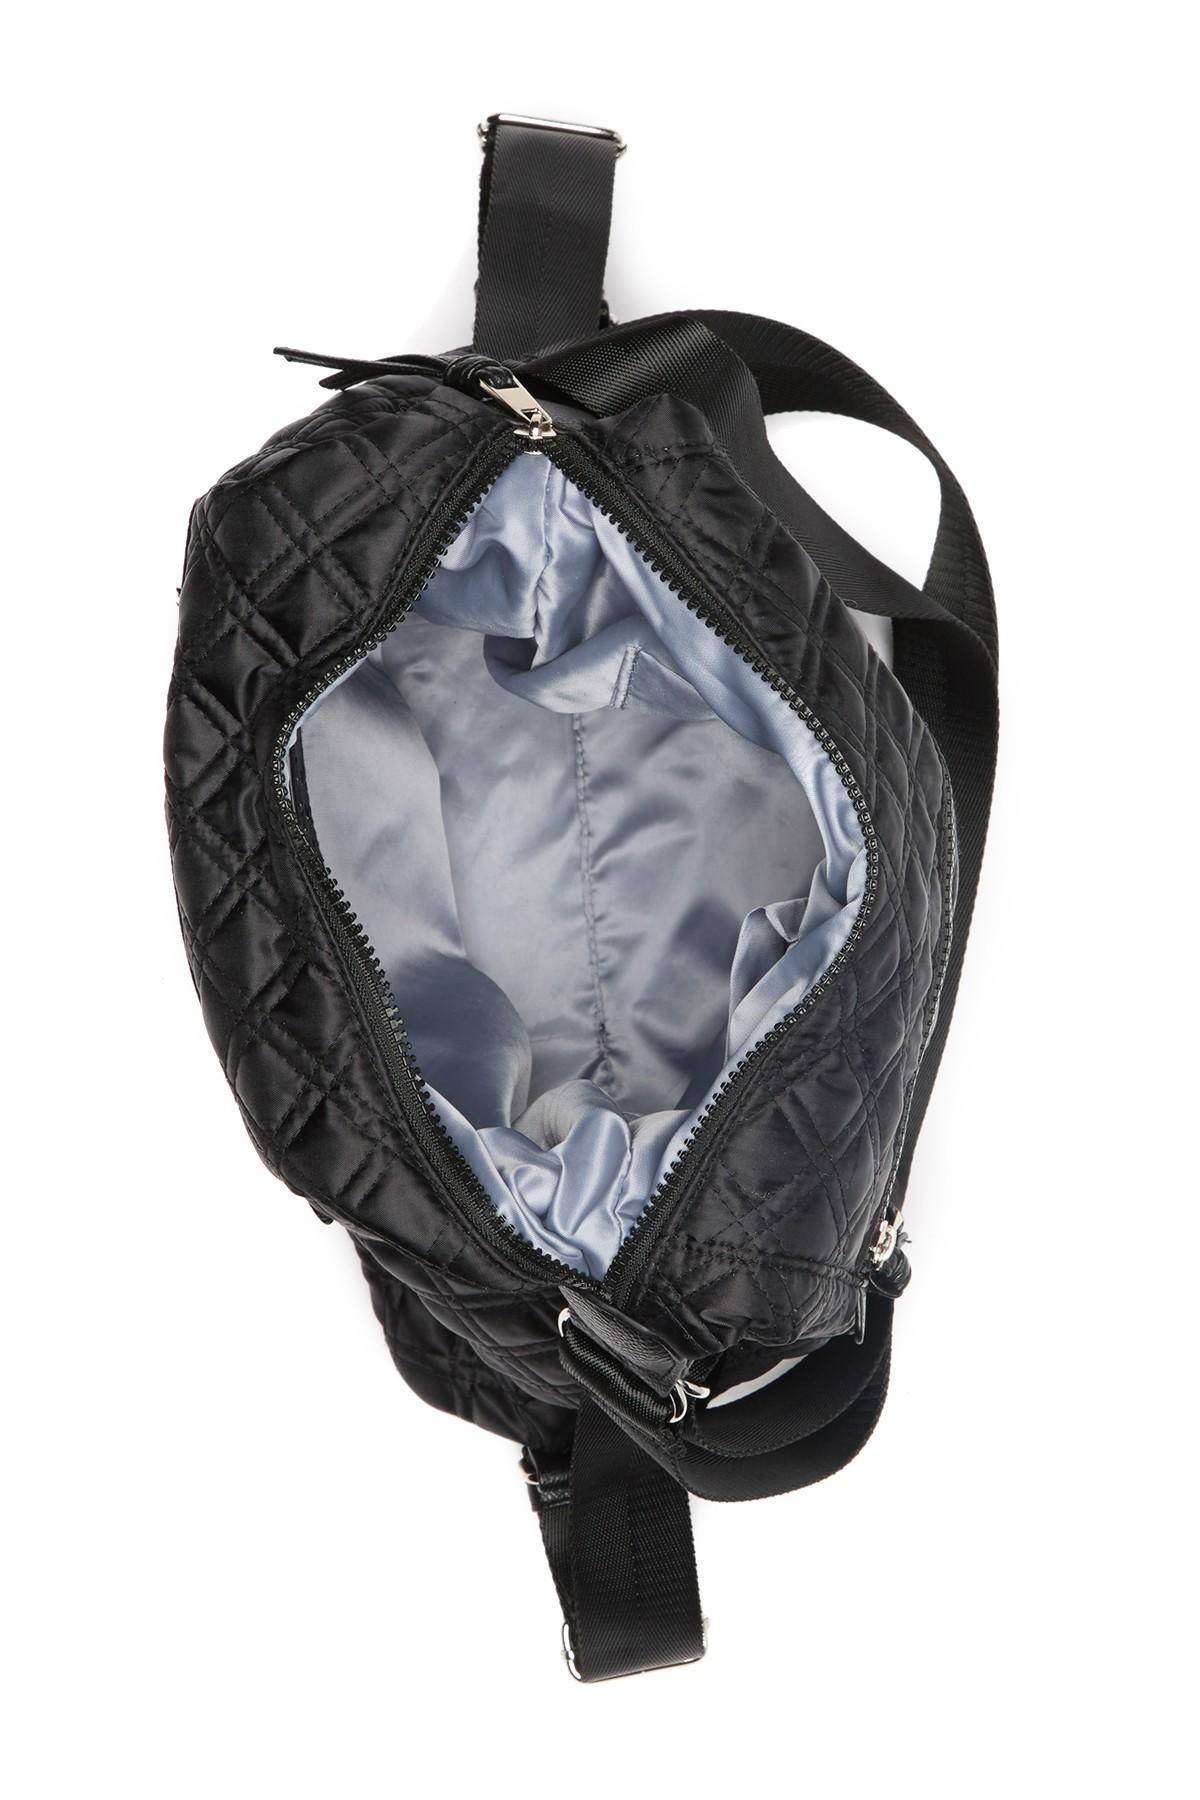 sondra roberts travel bag